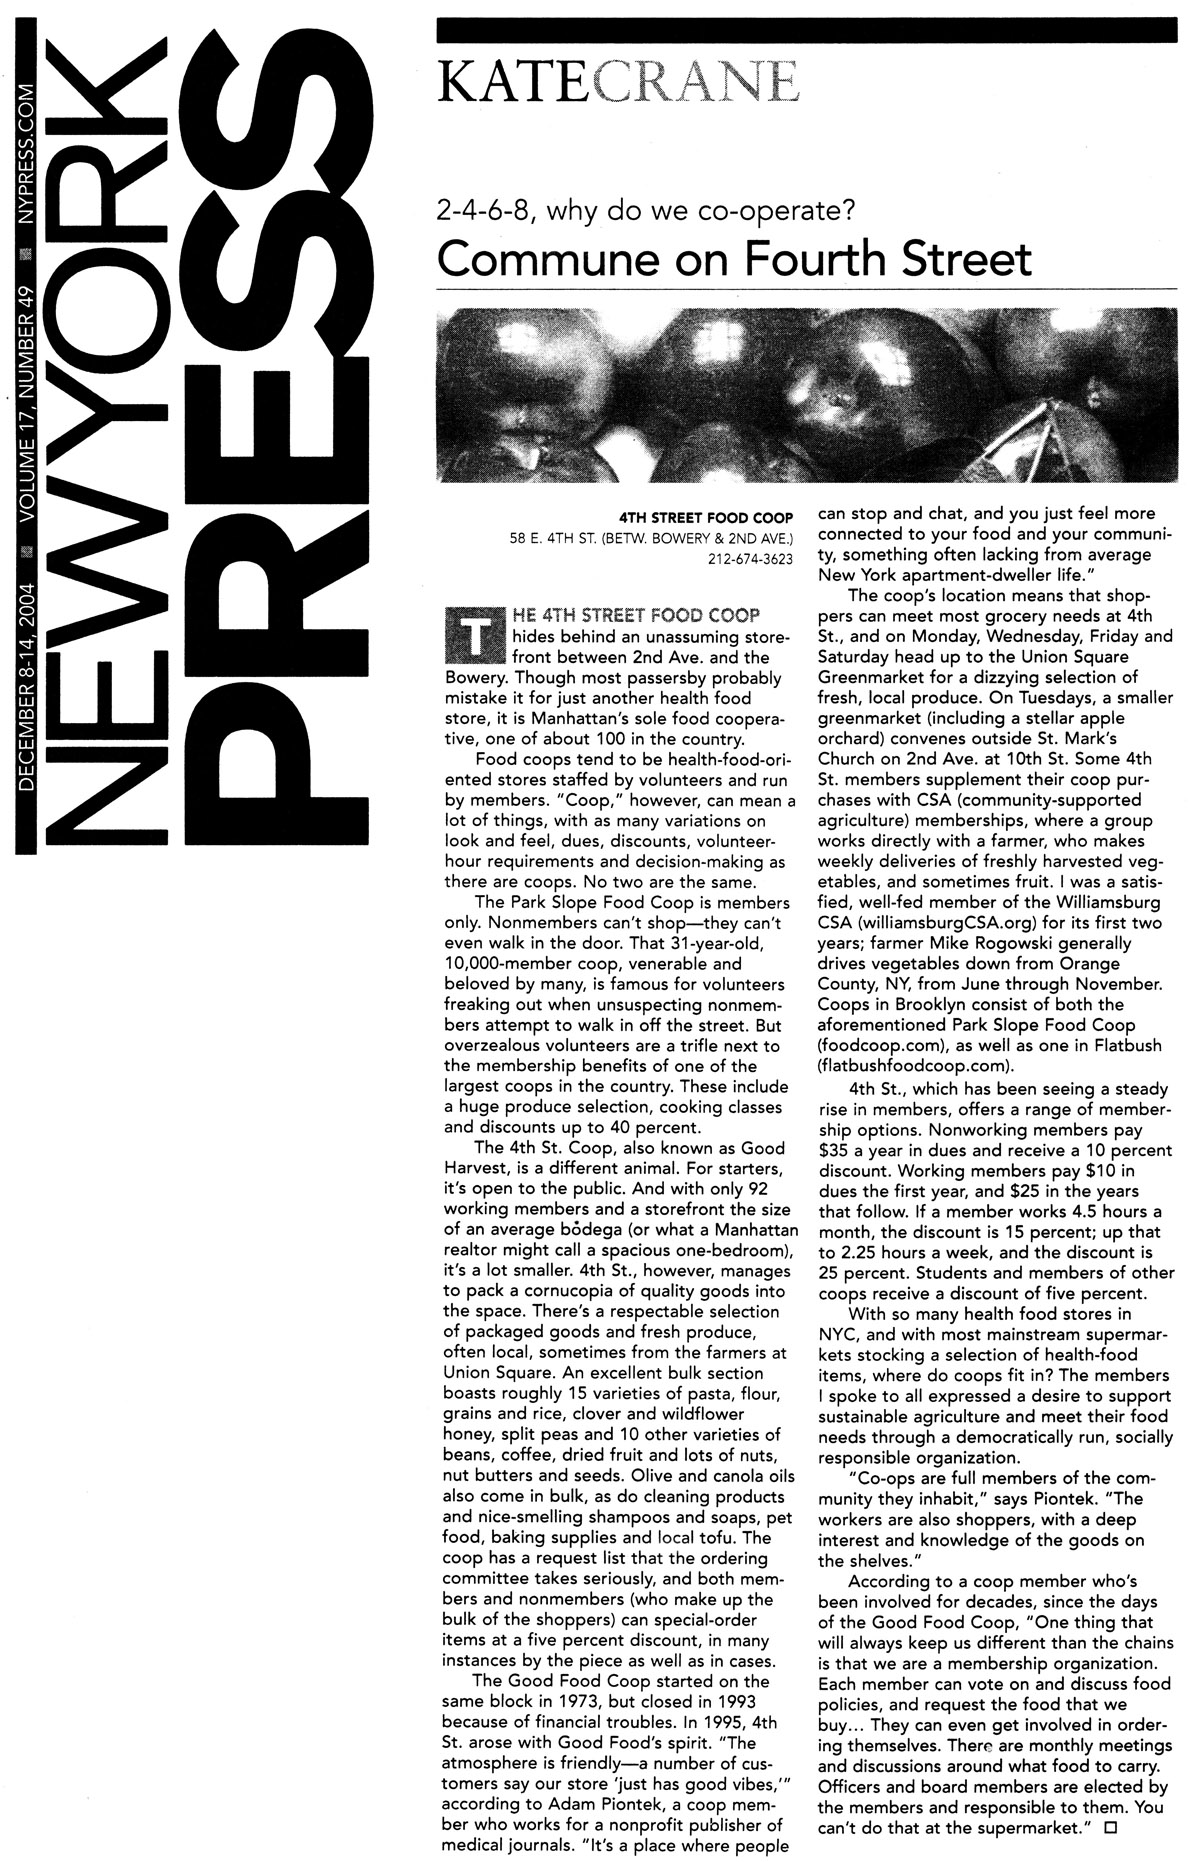 Commune on 4th Street. New York Press. Apr. 12, 2008.